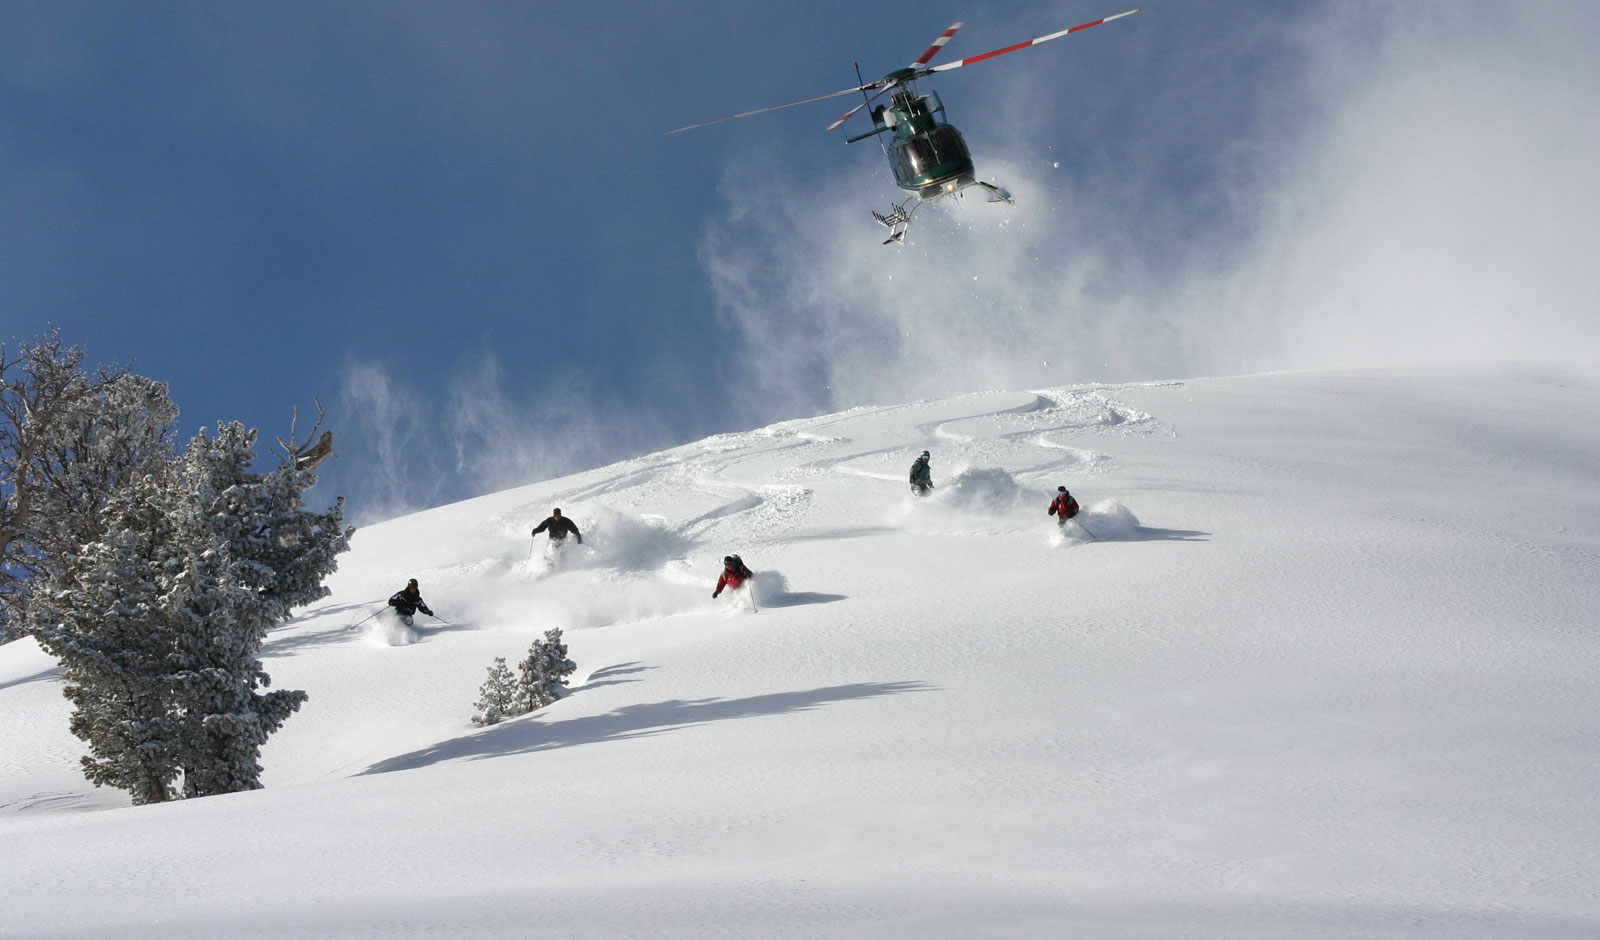 U.S. Heli Skiing Operators, Heli skiing out west, heli skiing in Alaska, heli skiing in Jackson Hole, Heli skiing in Colorado